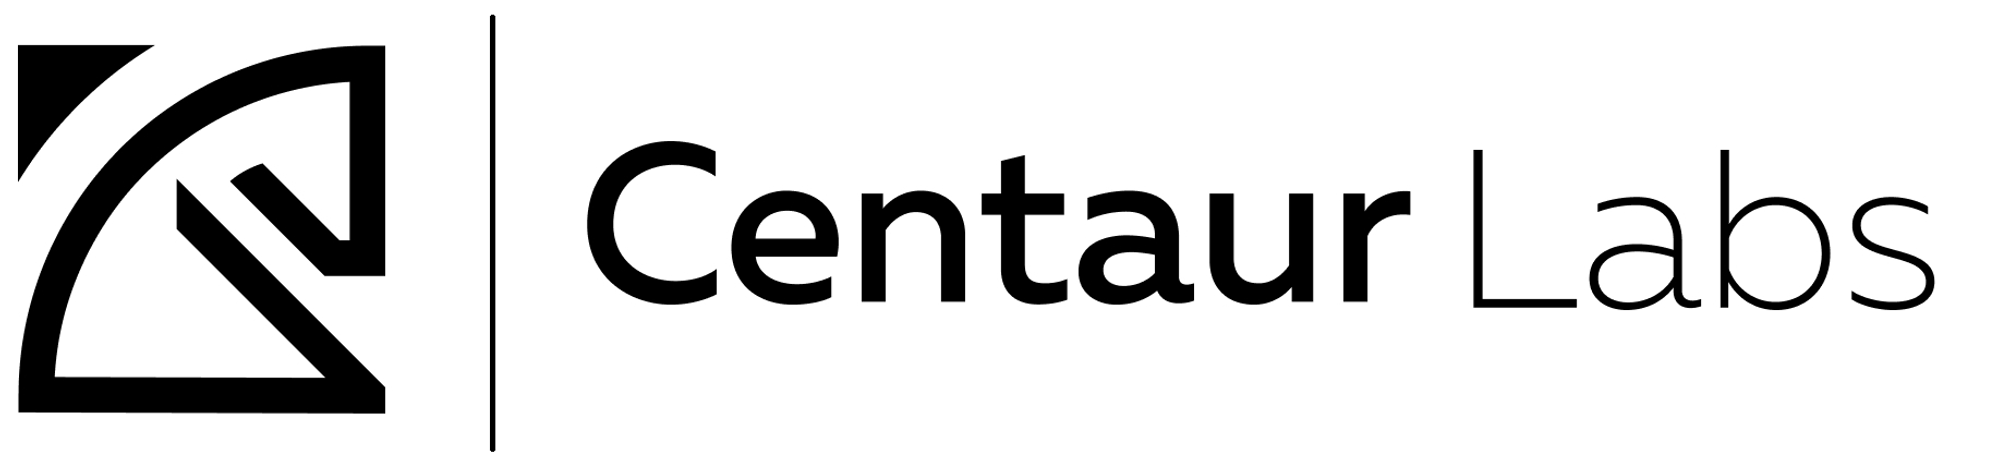 Centaur - Annotate Medical Video Software